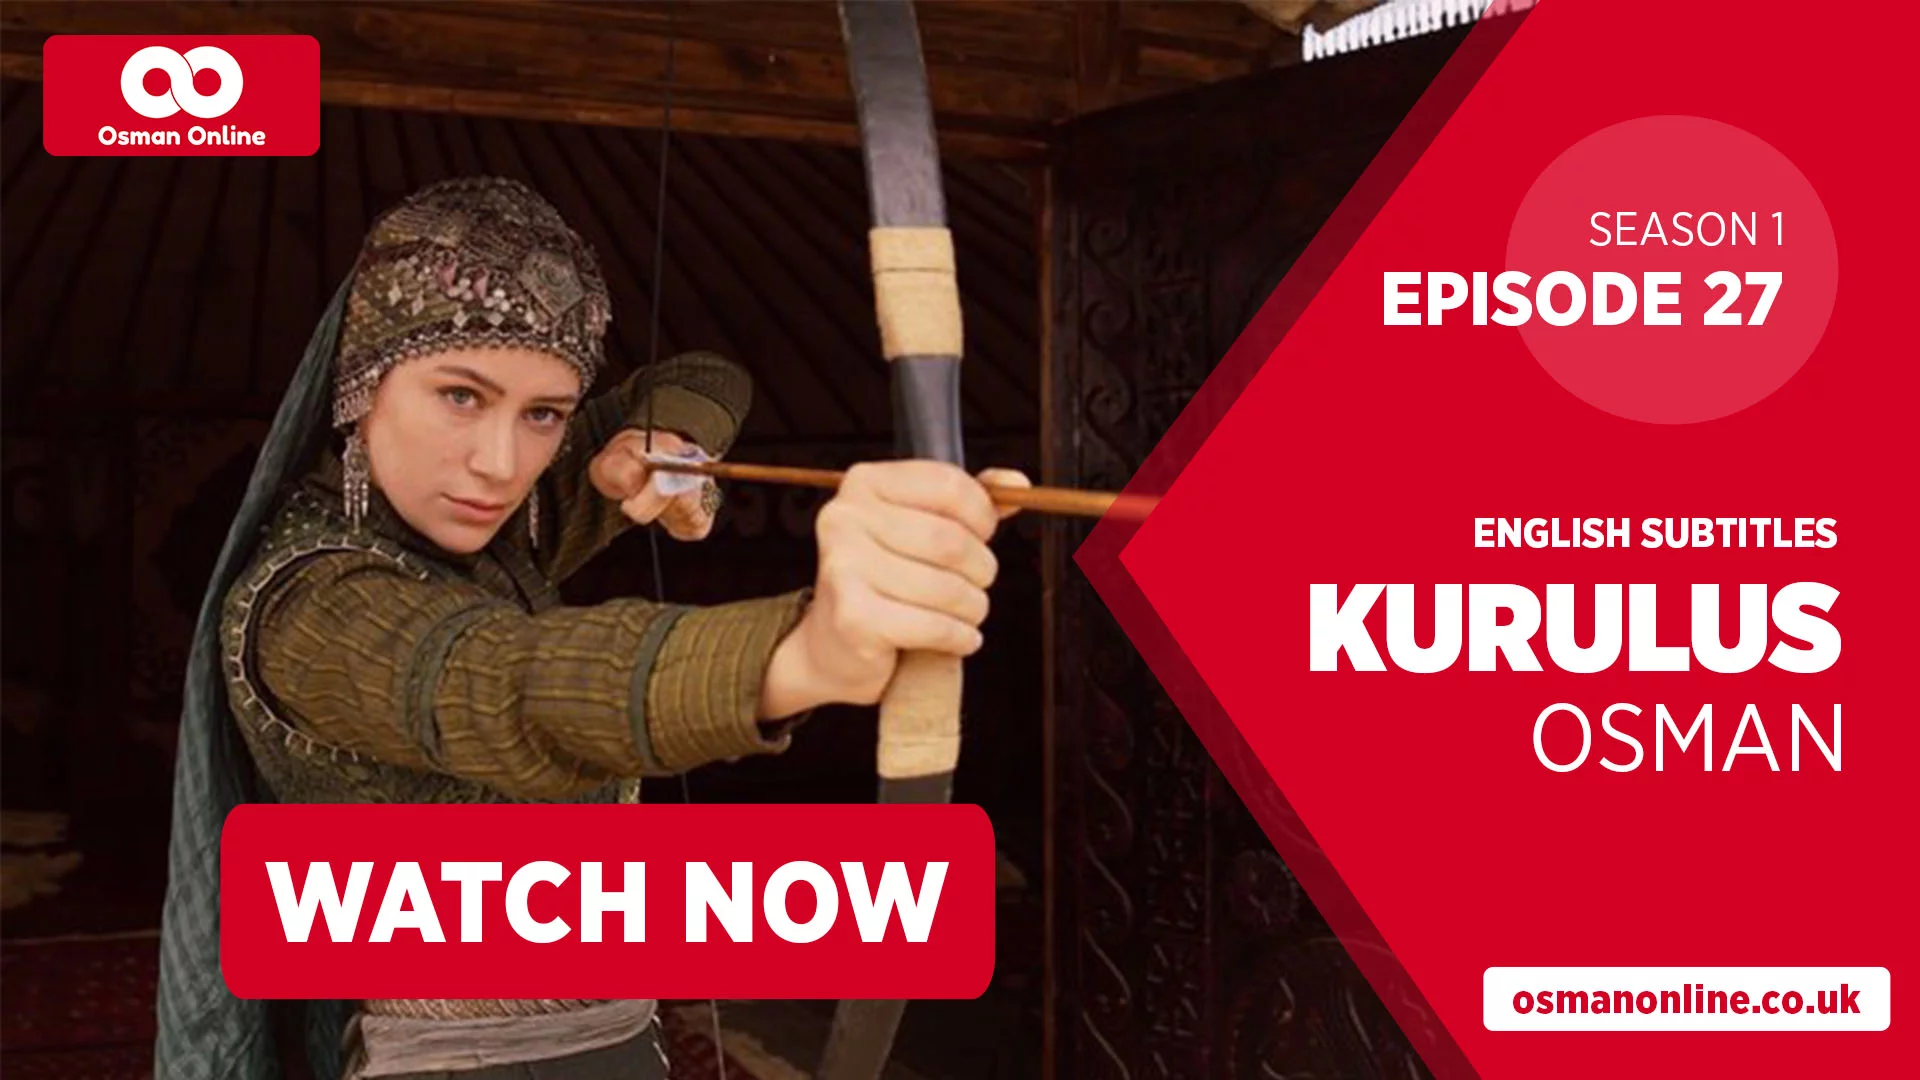 Watch Kurulus Osman Season 1 Episode 27 with English Subtitles